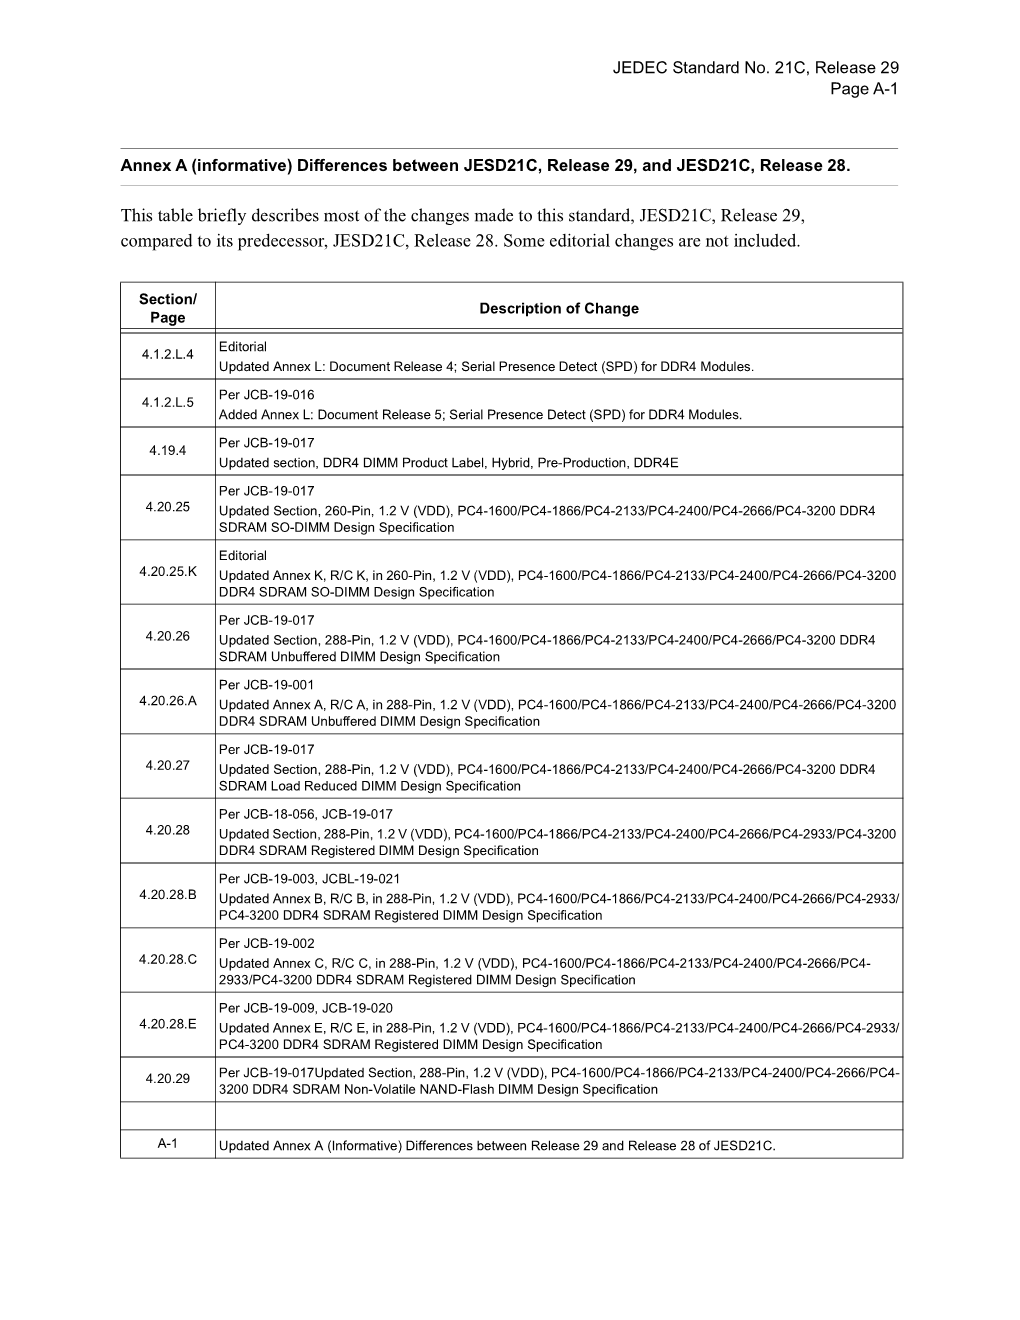 JEDEC Standard No. 21C, Release 29 Page A-1 Annex a (Informative)